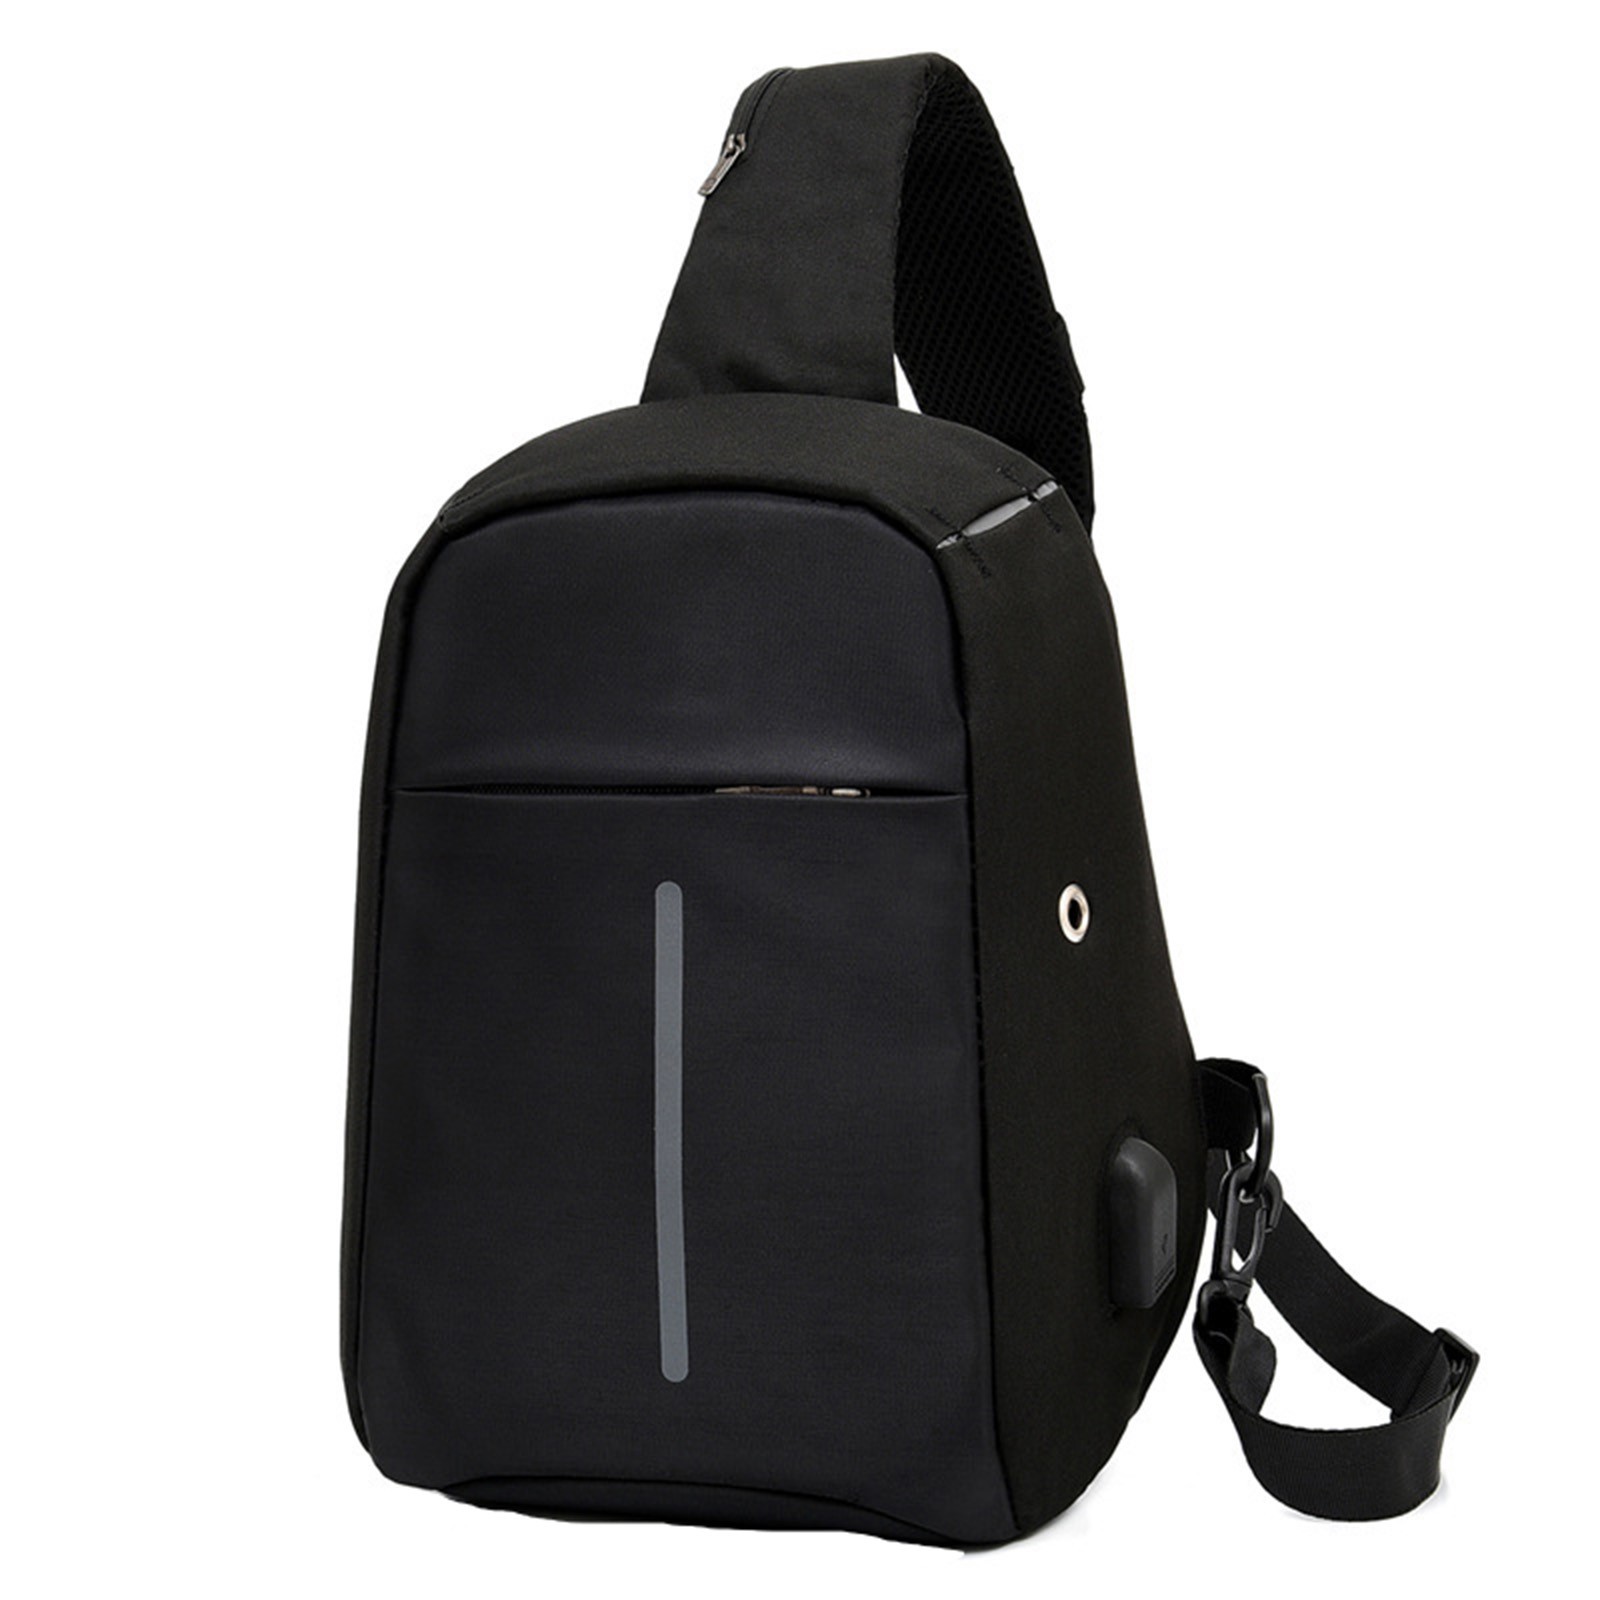 LIANGP Bag Products Waterproof Sling Bag Boy Zipper Bag Lightweight ...